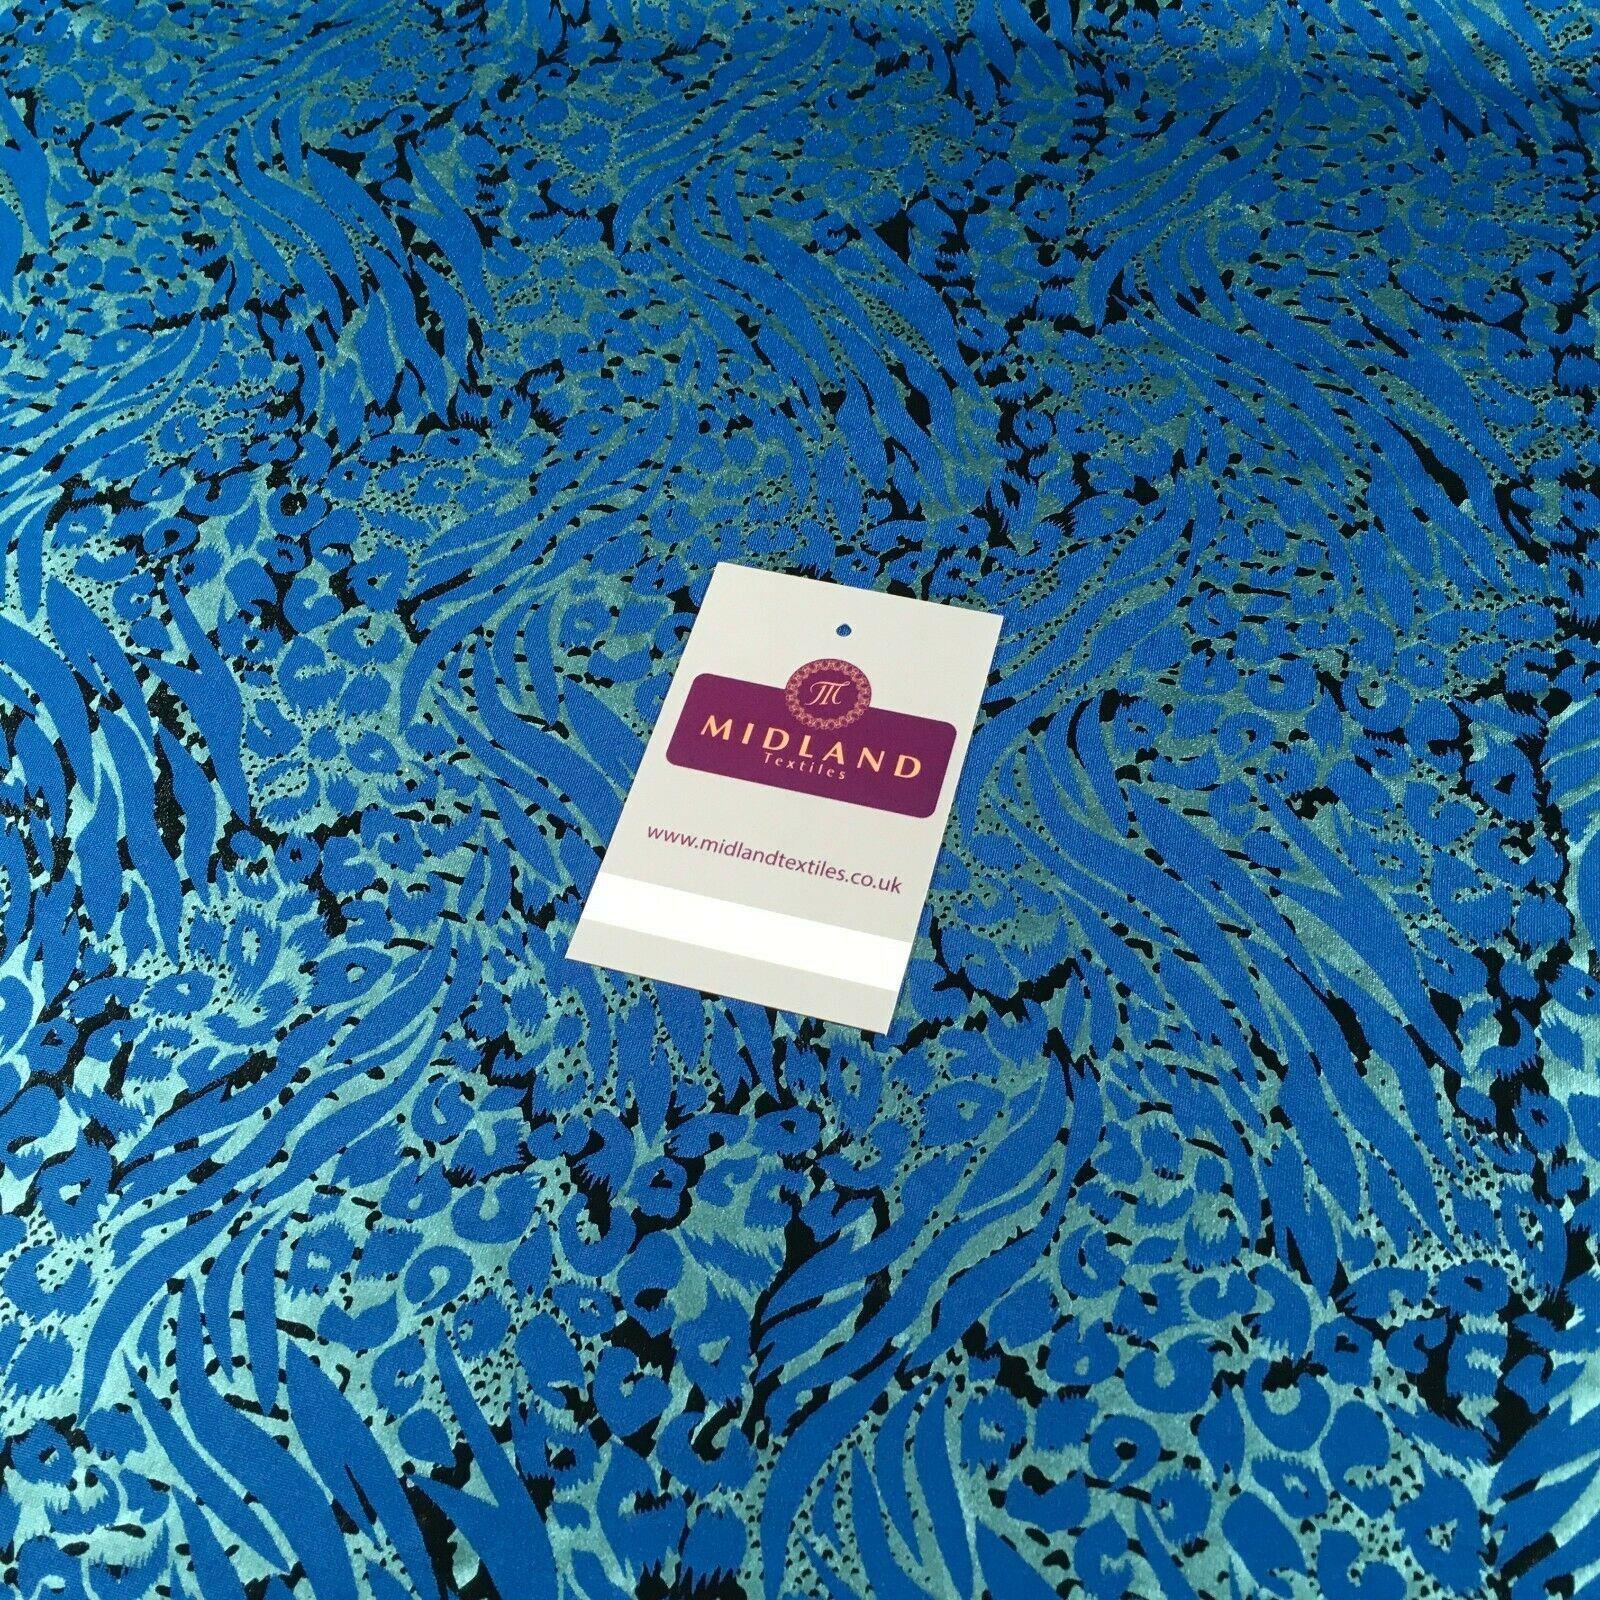 Blue Animal Print Spandex Jersey Foil Stretch Dress Fabric 150cm MU1303